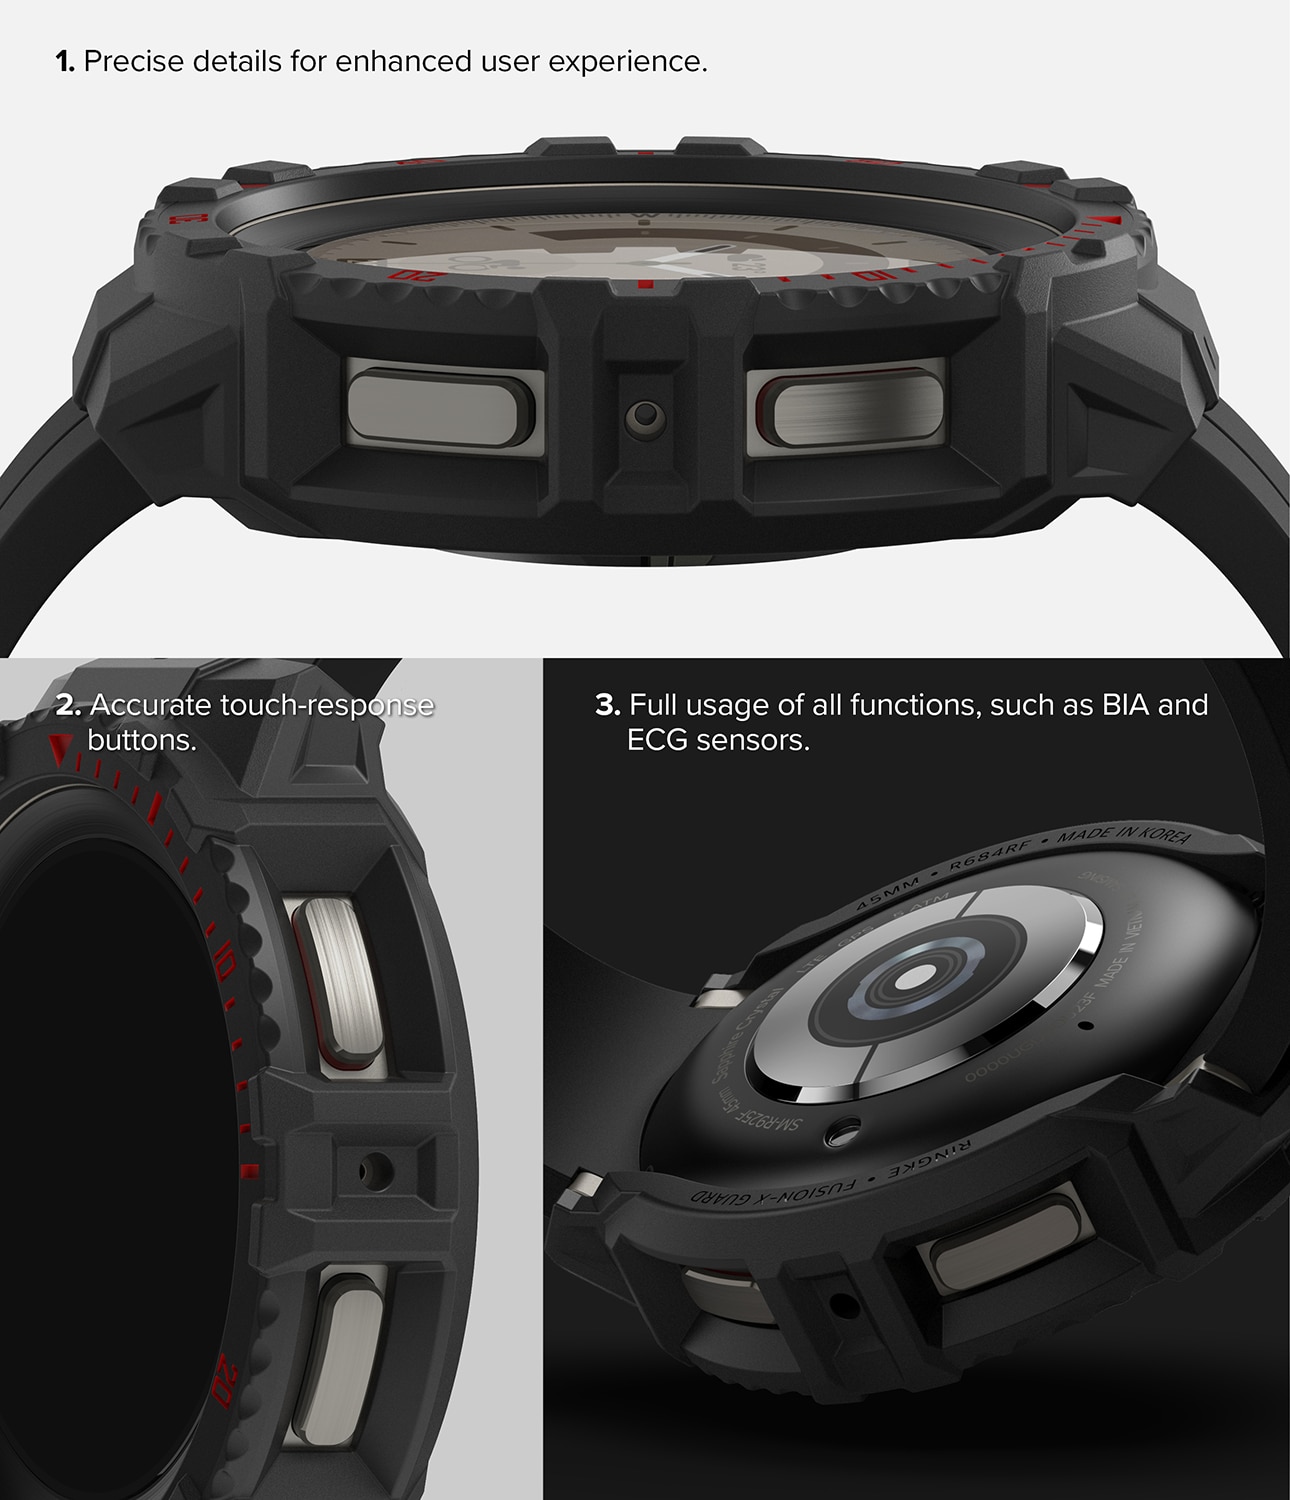 Fusion X Deksel Samsung Galaxy Watch 5 Pro 45mm Black (Red Index)